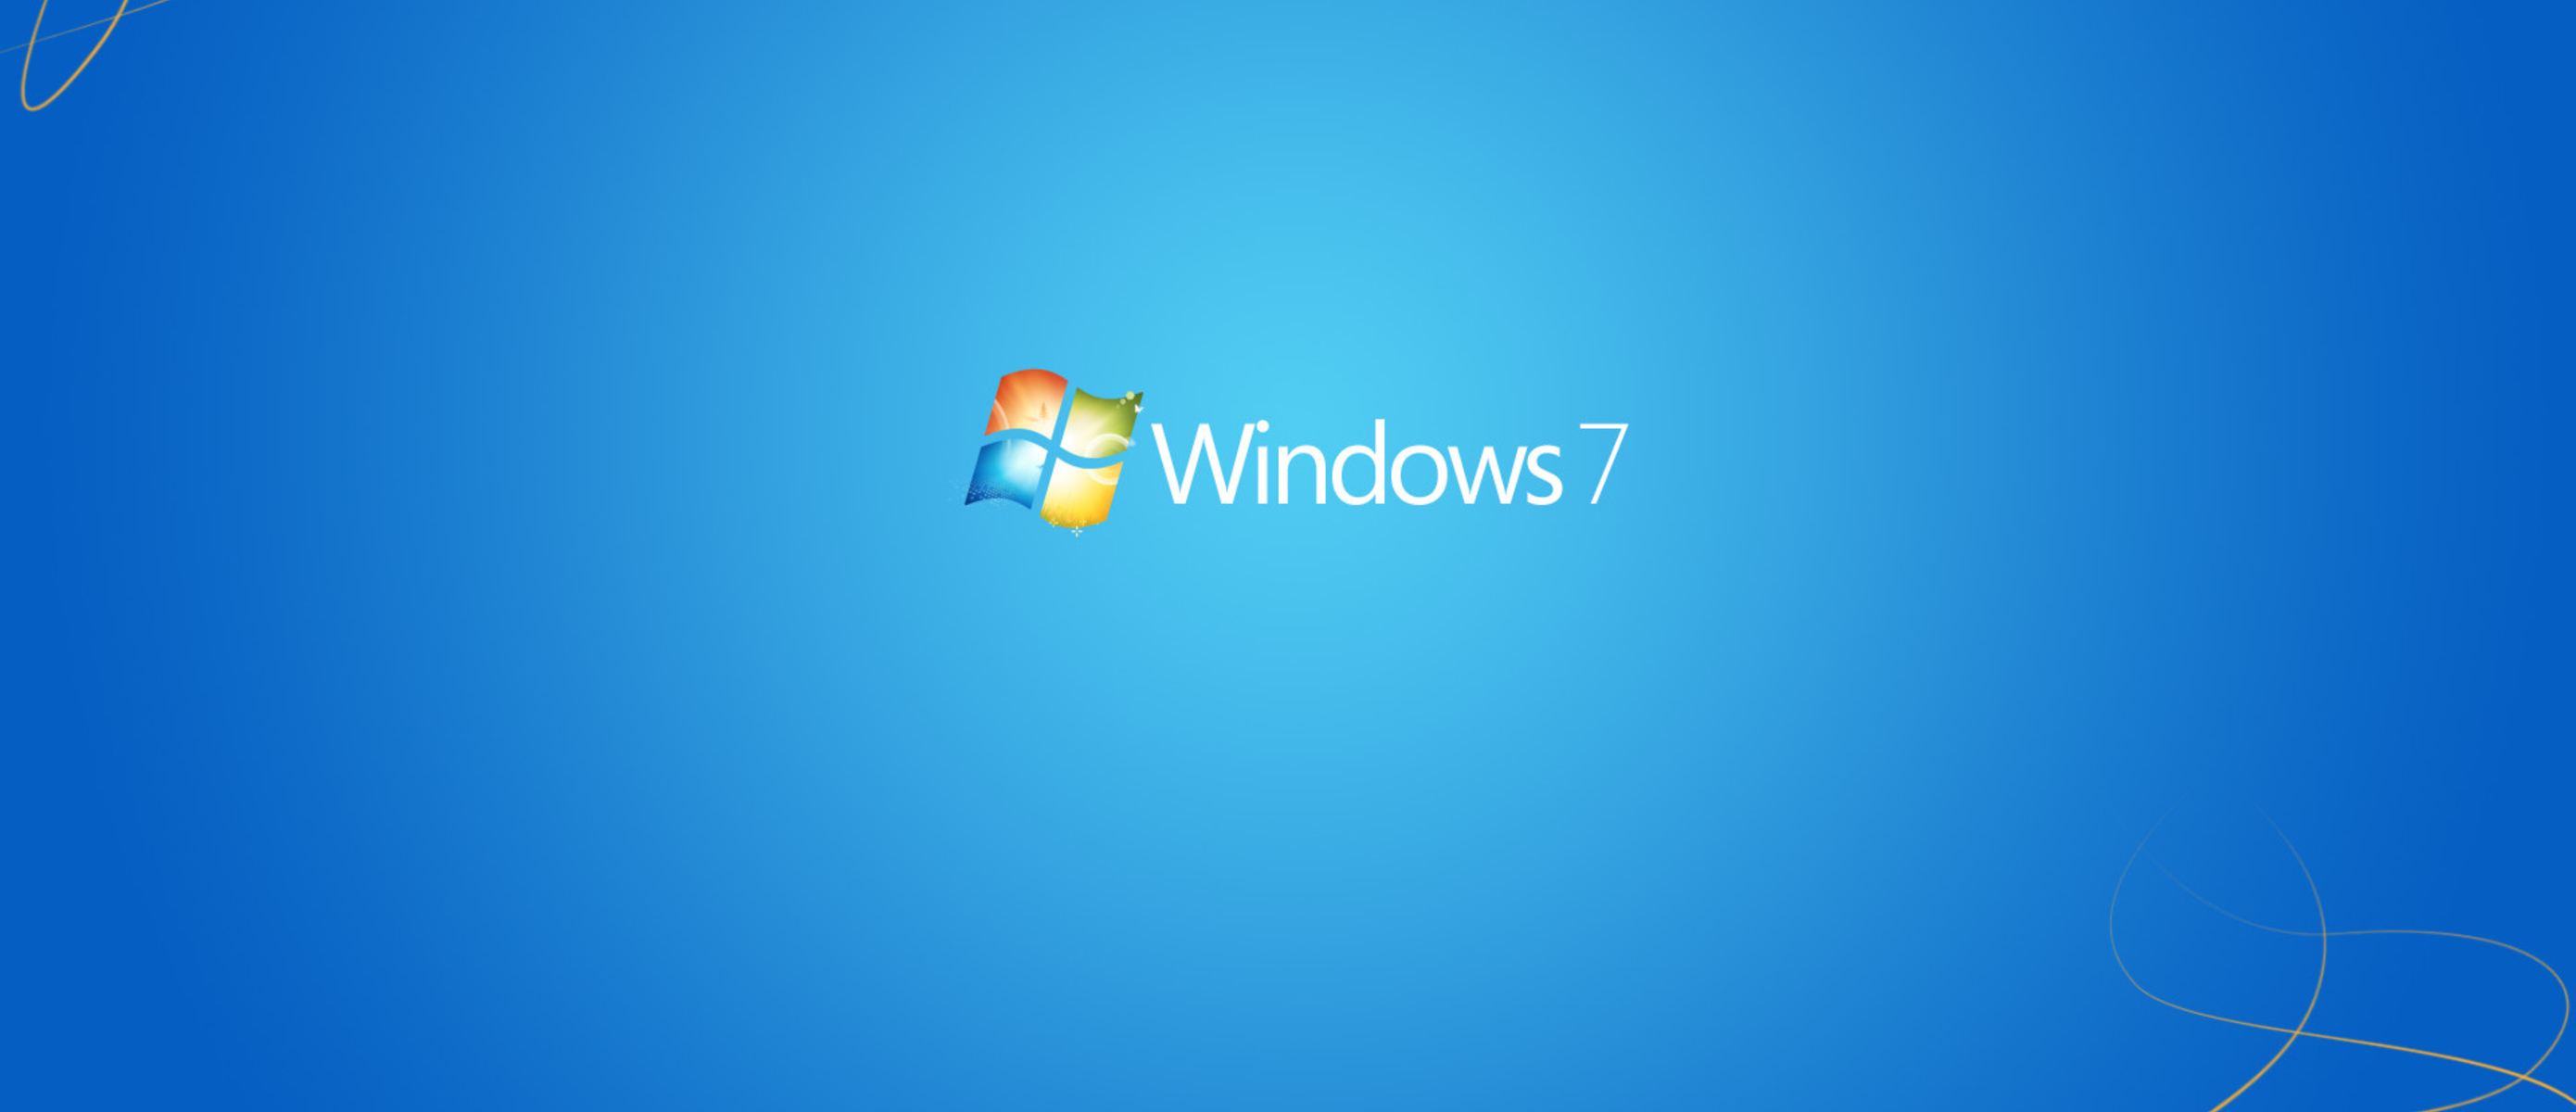 Сборки вин 7. Виндовс 7. Обои Windows 7. Картинки на рабочий стол виндовс 7. Фон Windows 7.